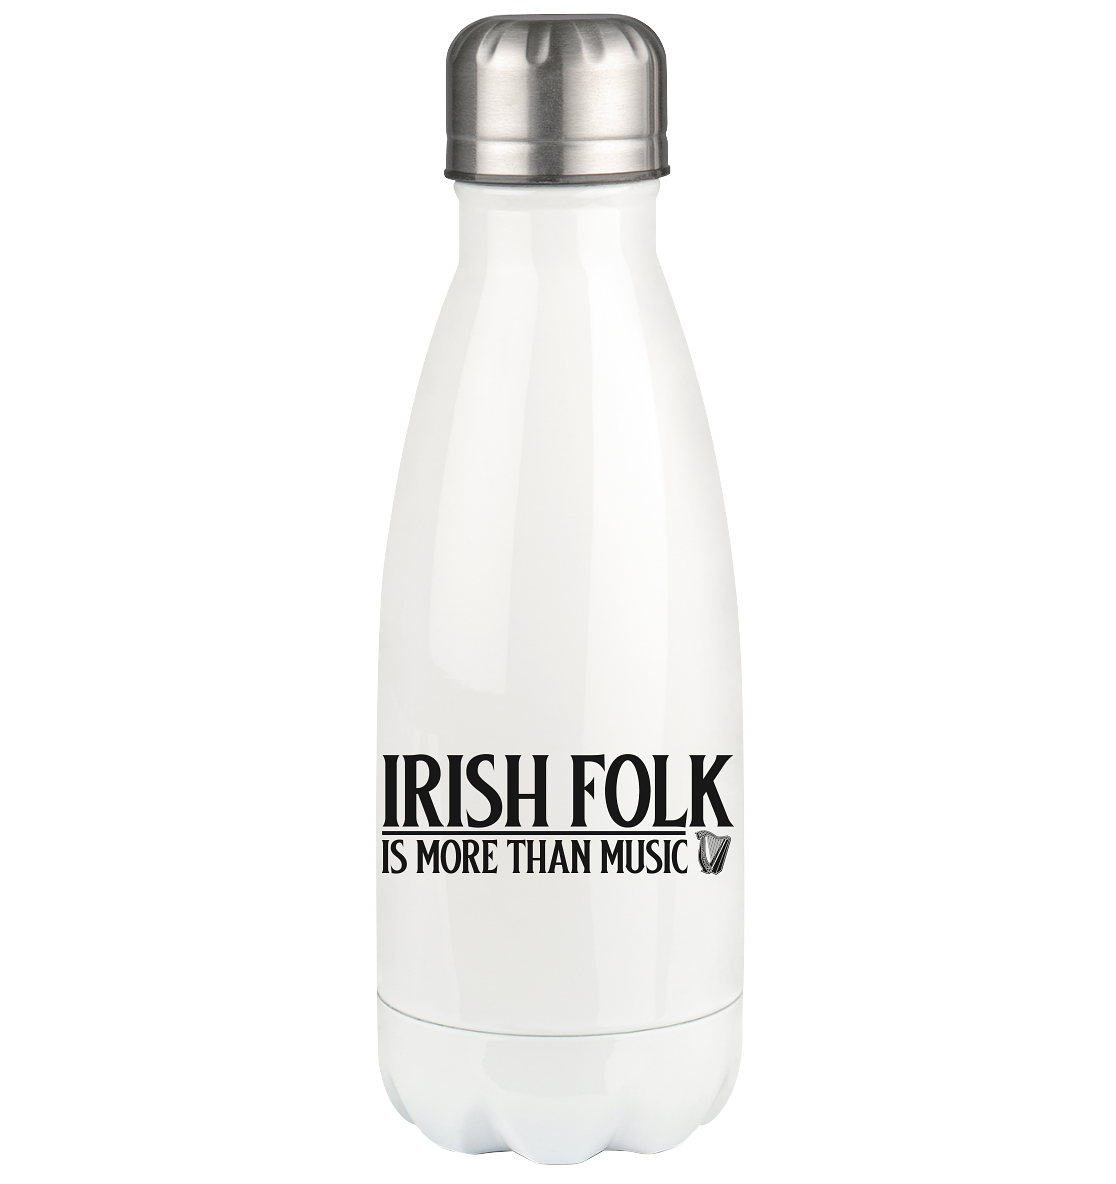 Irish Folk "Is More Than Music" - Thermoflasche 350ml